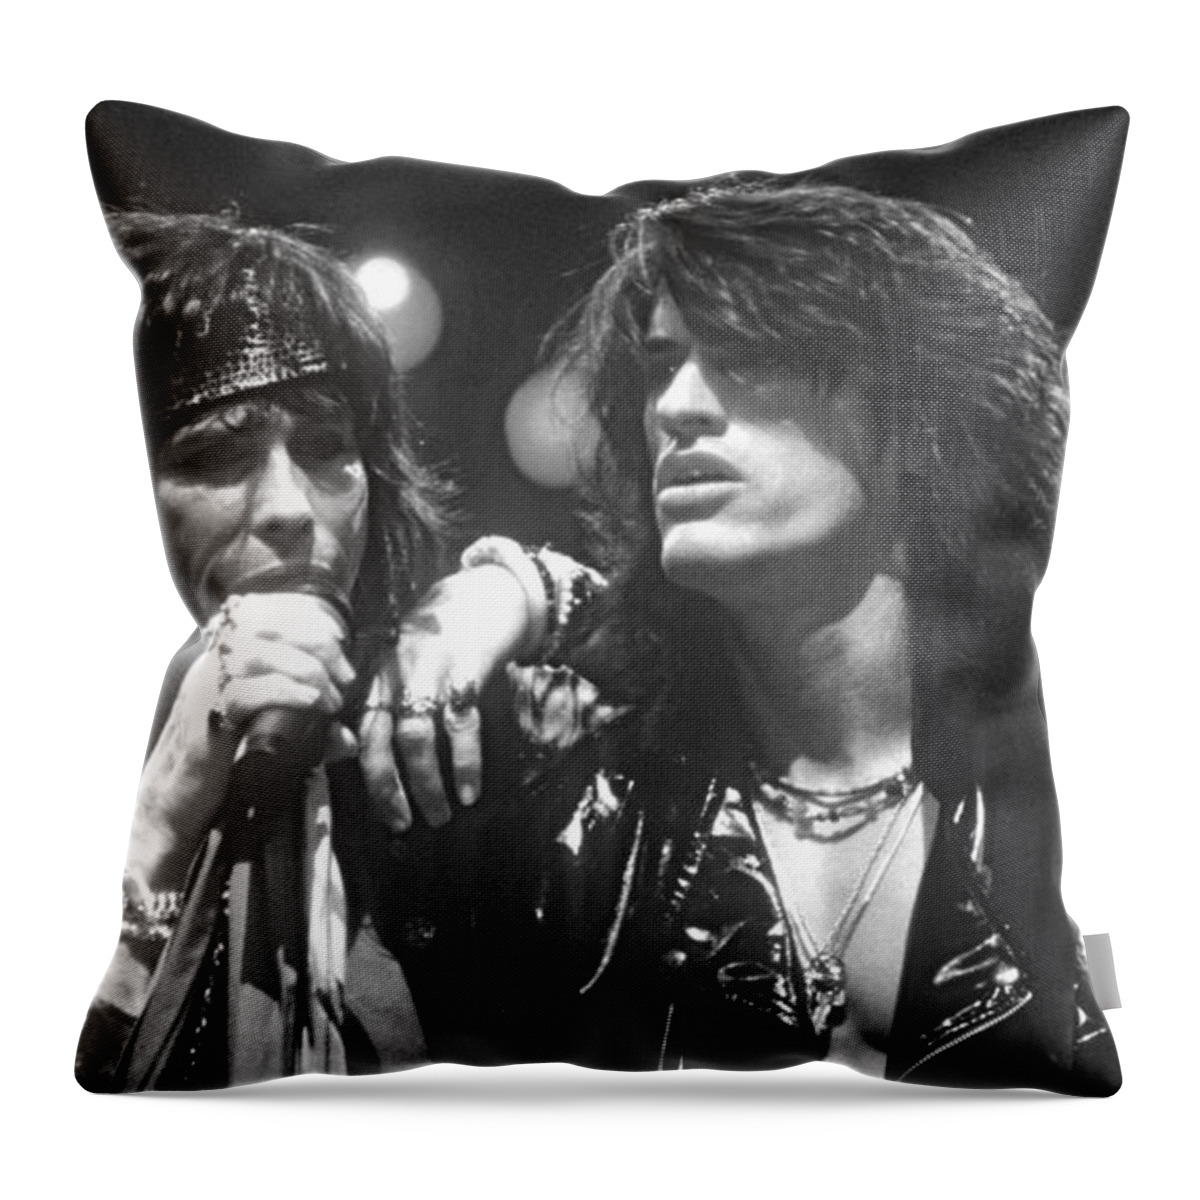 Aerosmith Throw Pillow featuring the photograph Aerosmith #1 by David Plastik